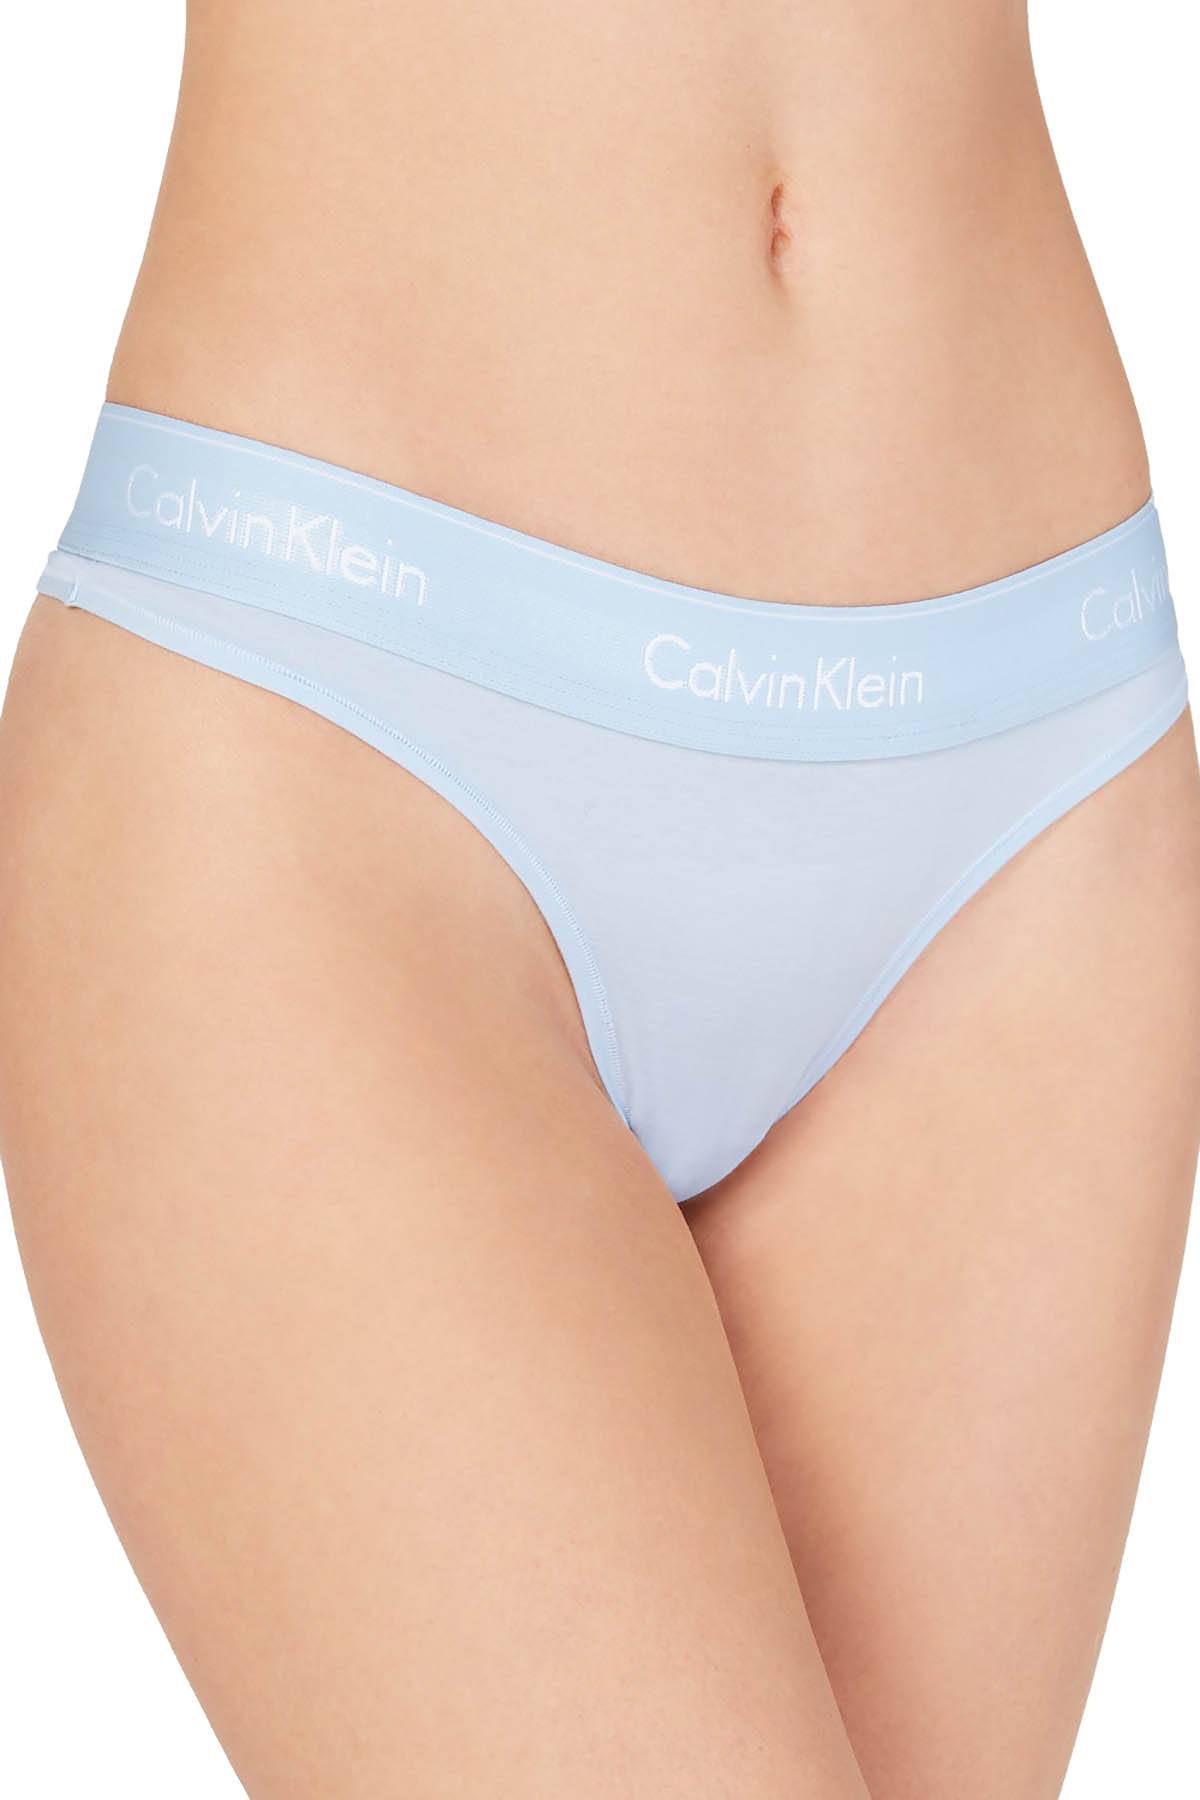 Calvin Klein Vent Blue Modern Cotton/Modal Thong